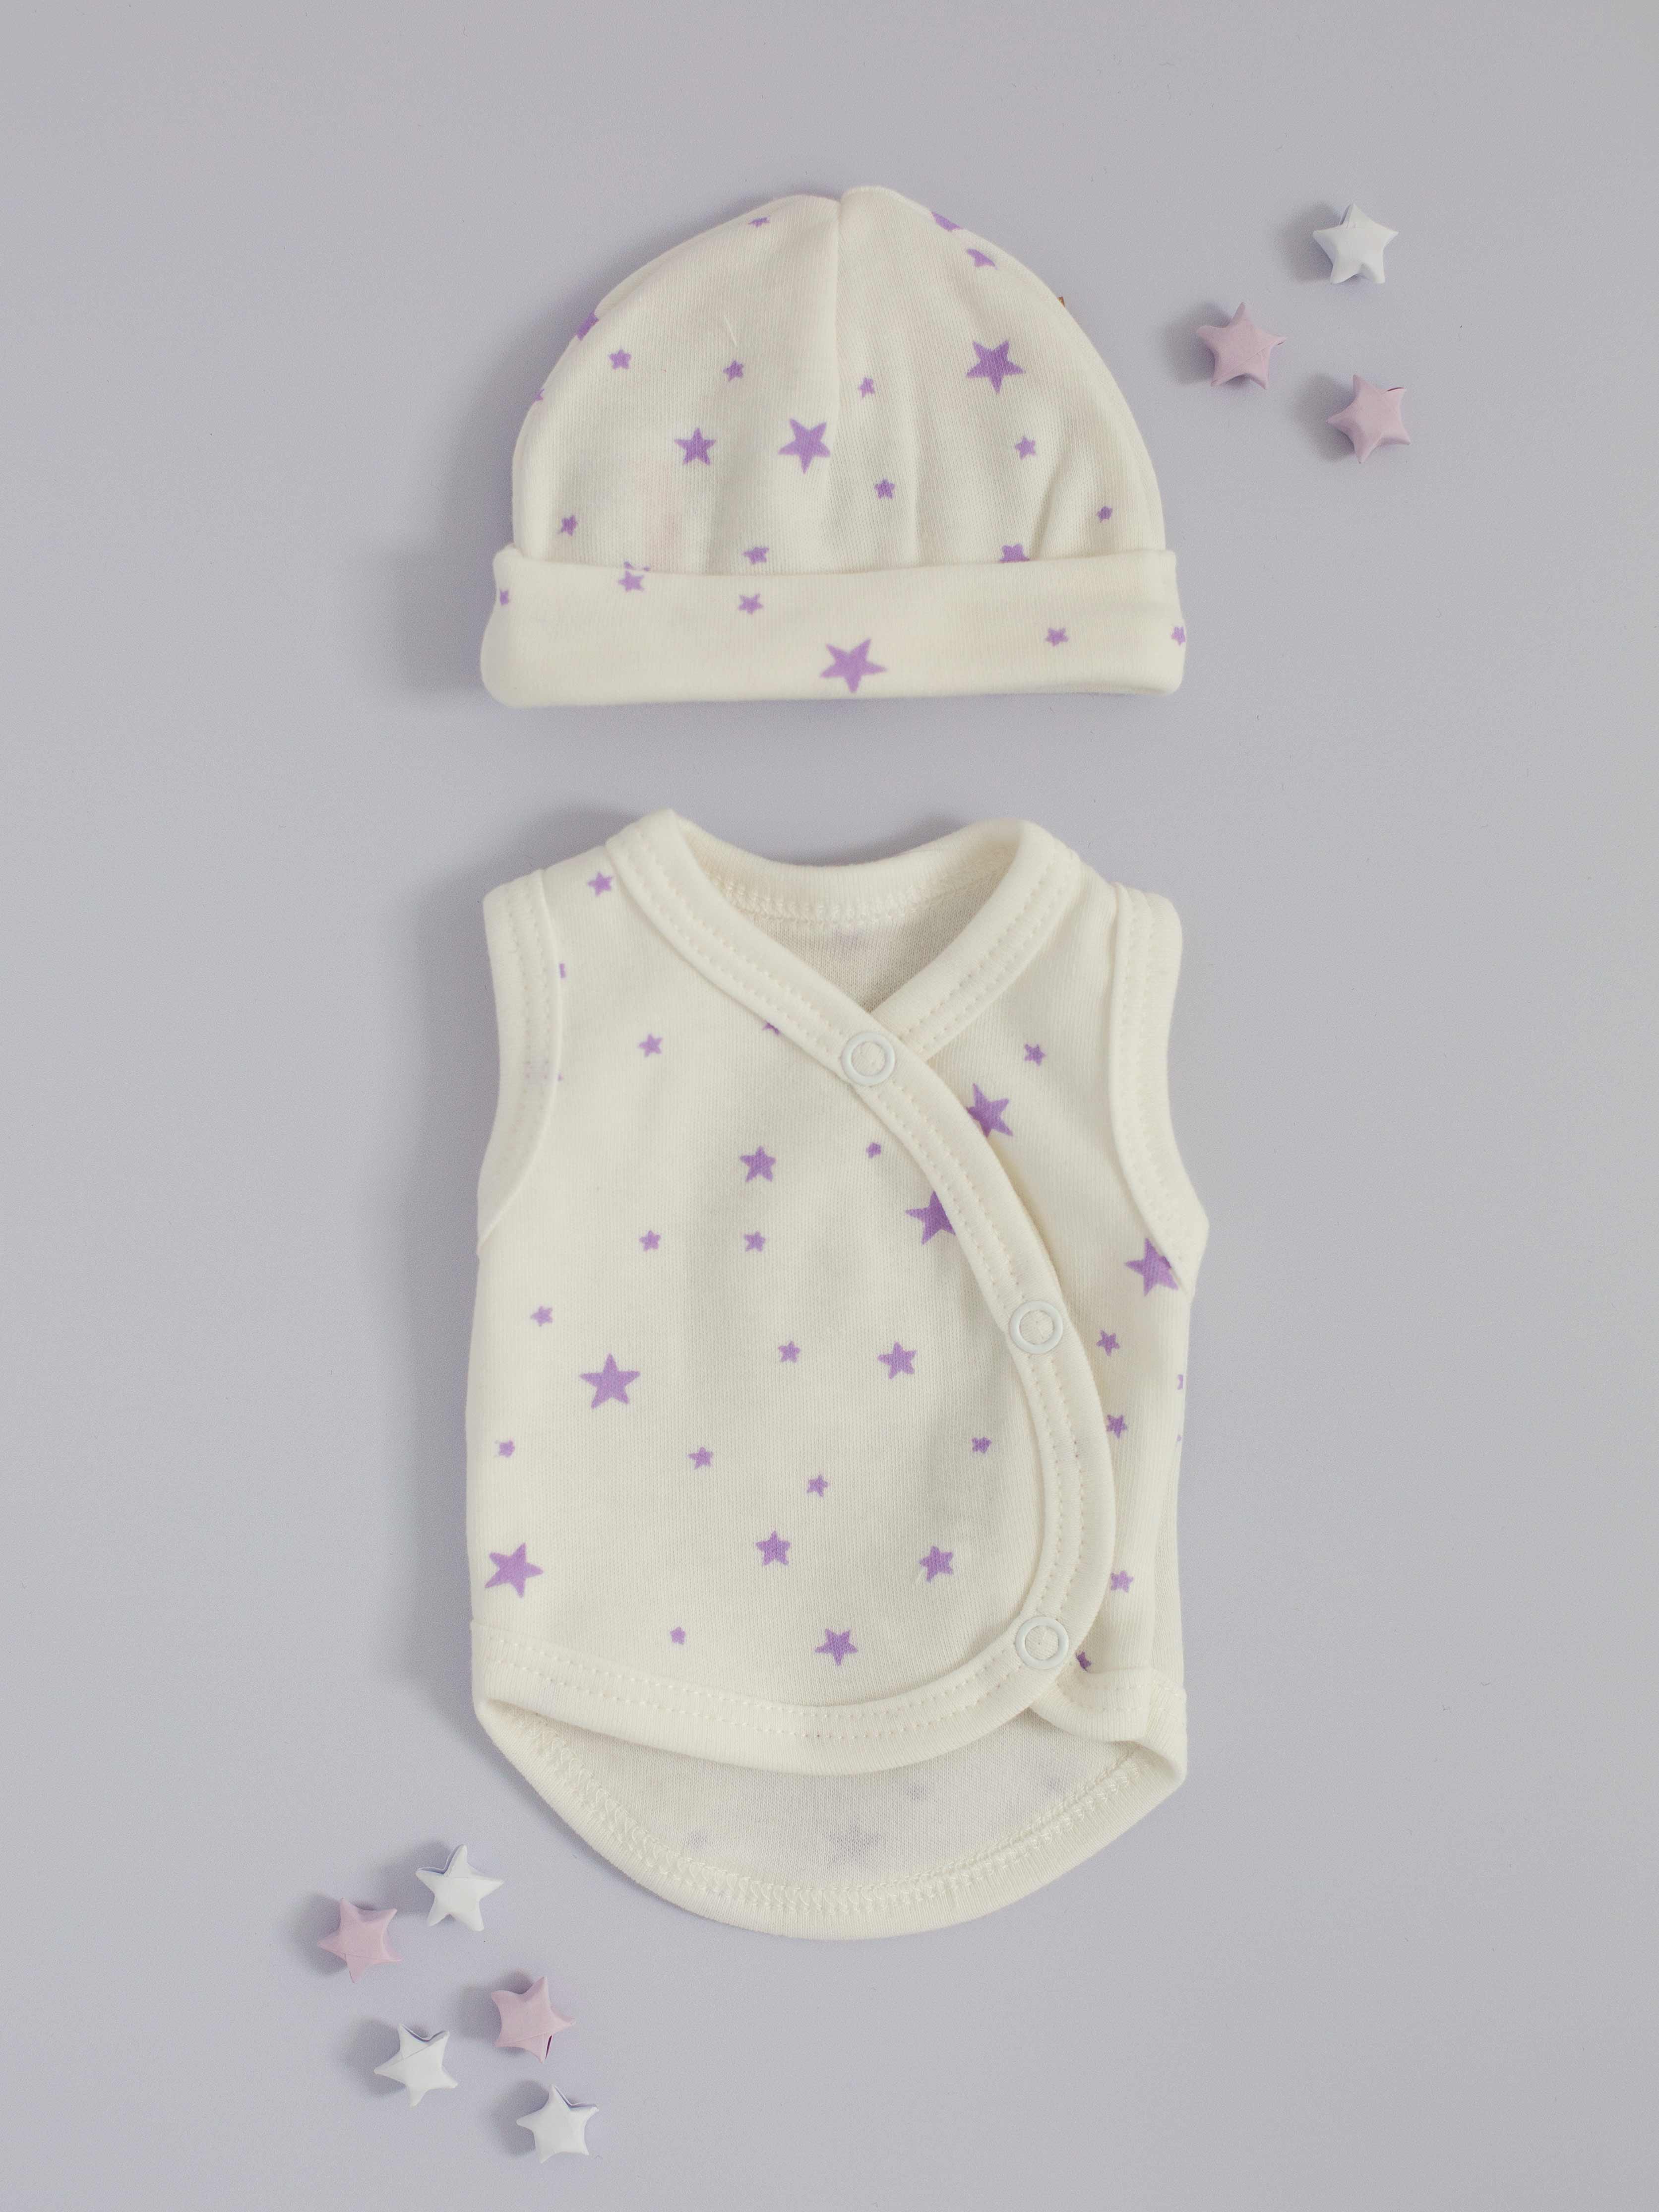 Incubator Vest & Round Hat Set Purple Stars, 100% Organic Cotton - Incubator Vest - Tiny & Small